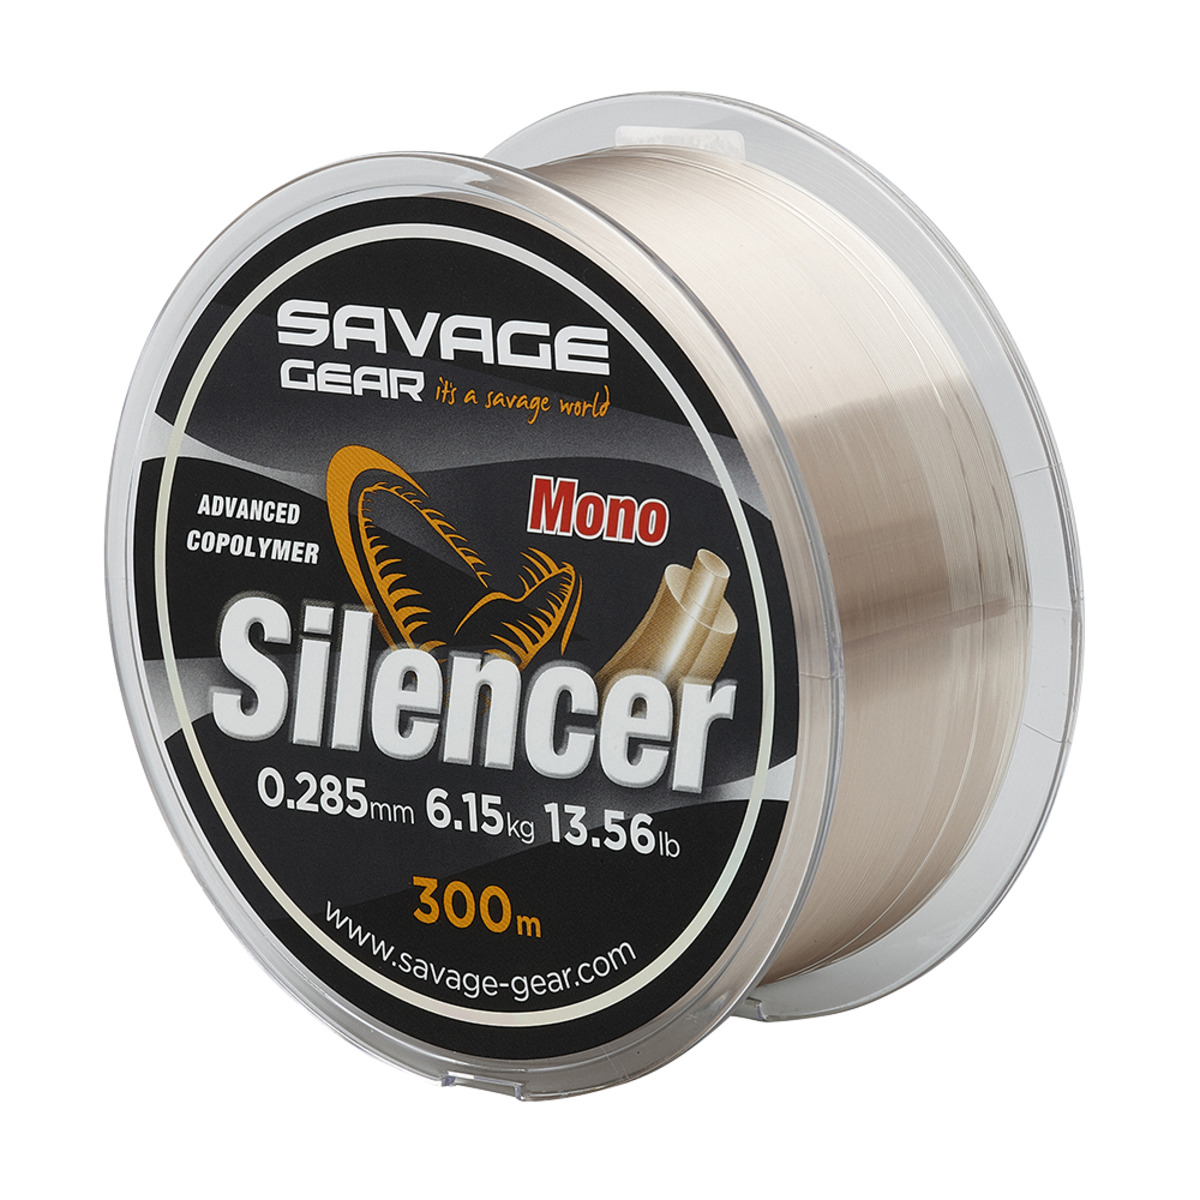 Savage Gear Silencer Mono 300m - 0.285MM  6.15KG 13.56LB FADE